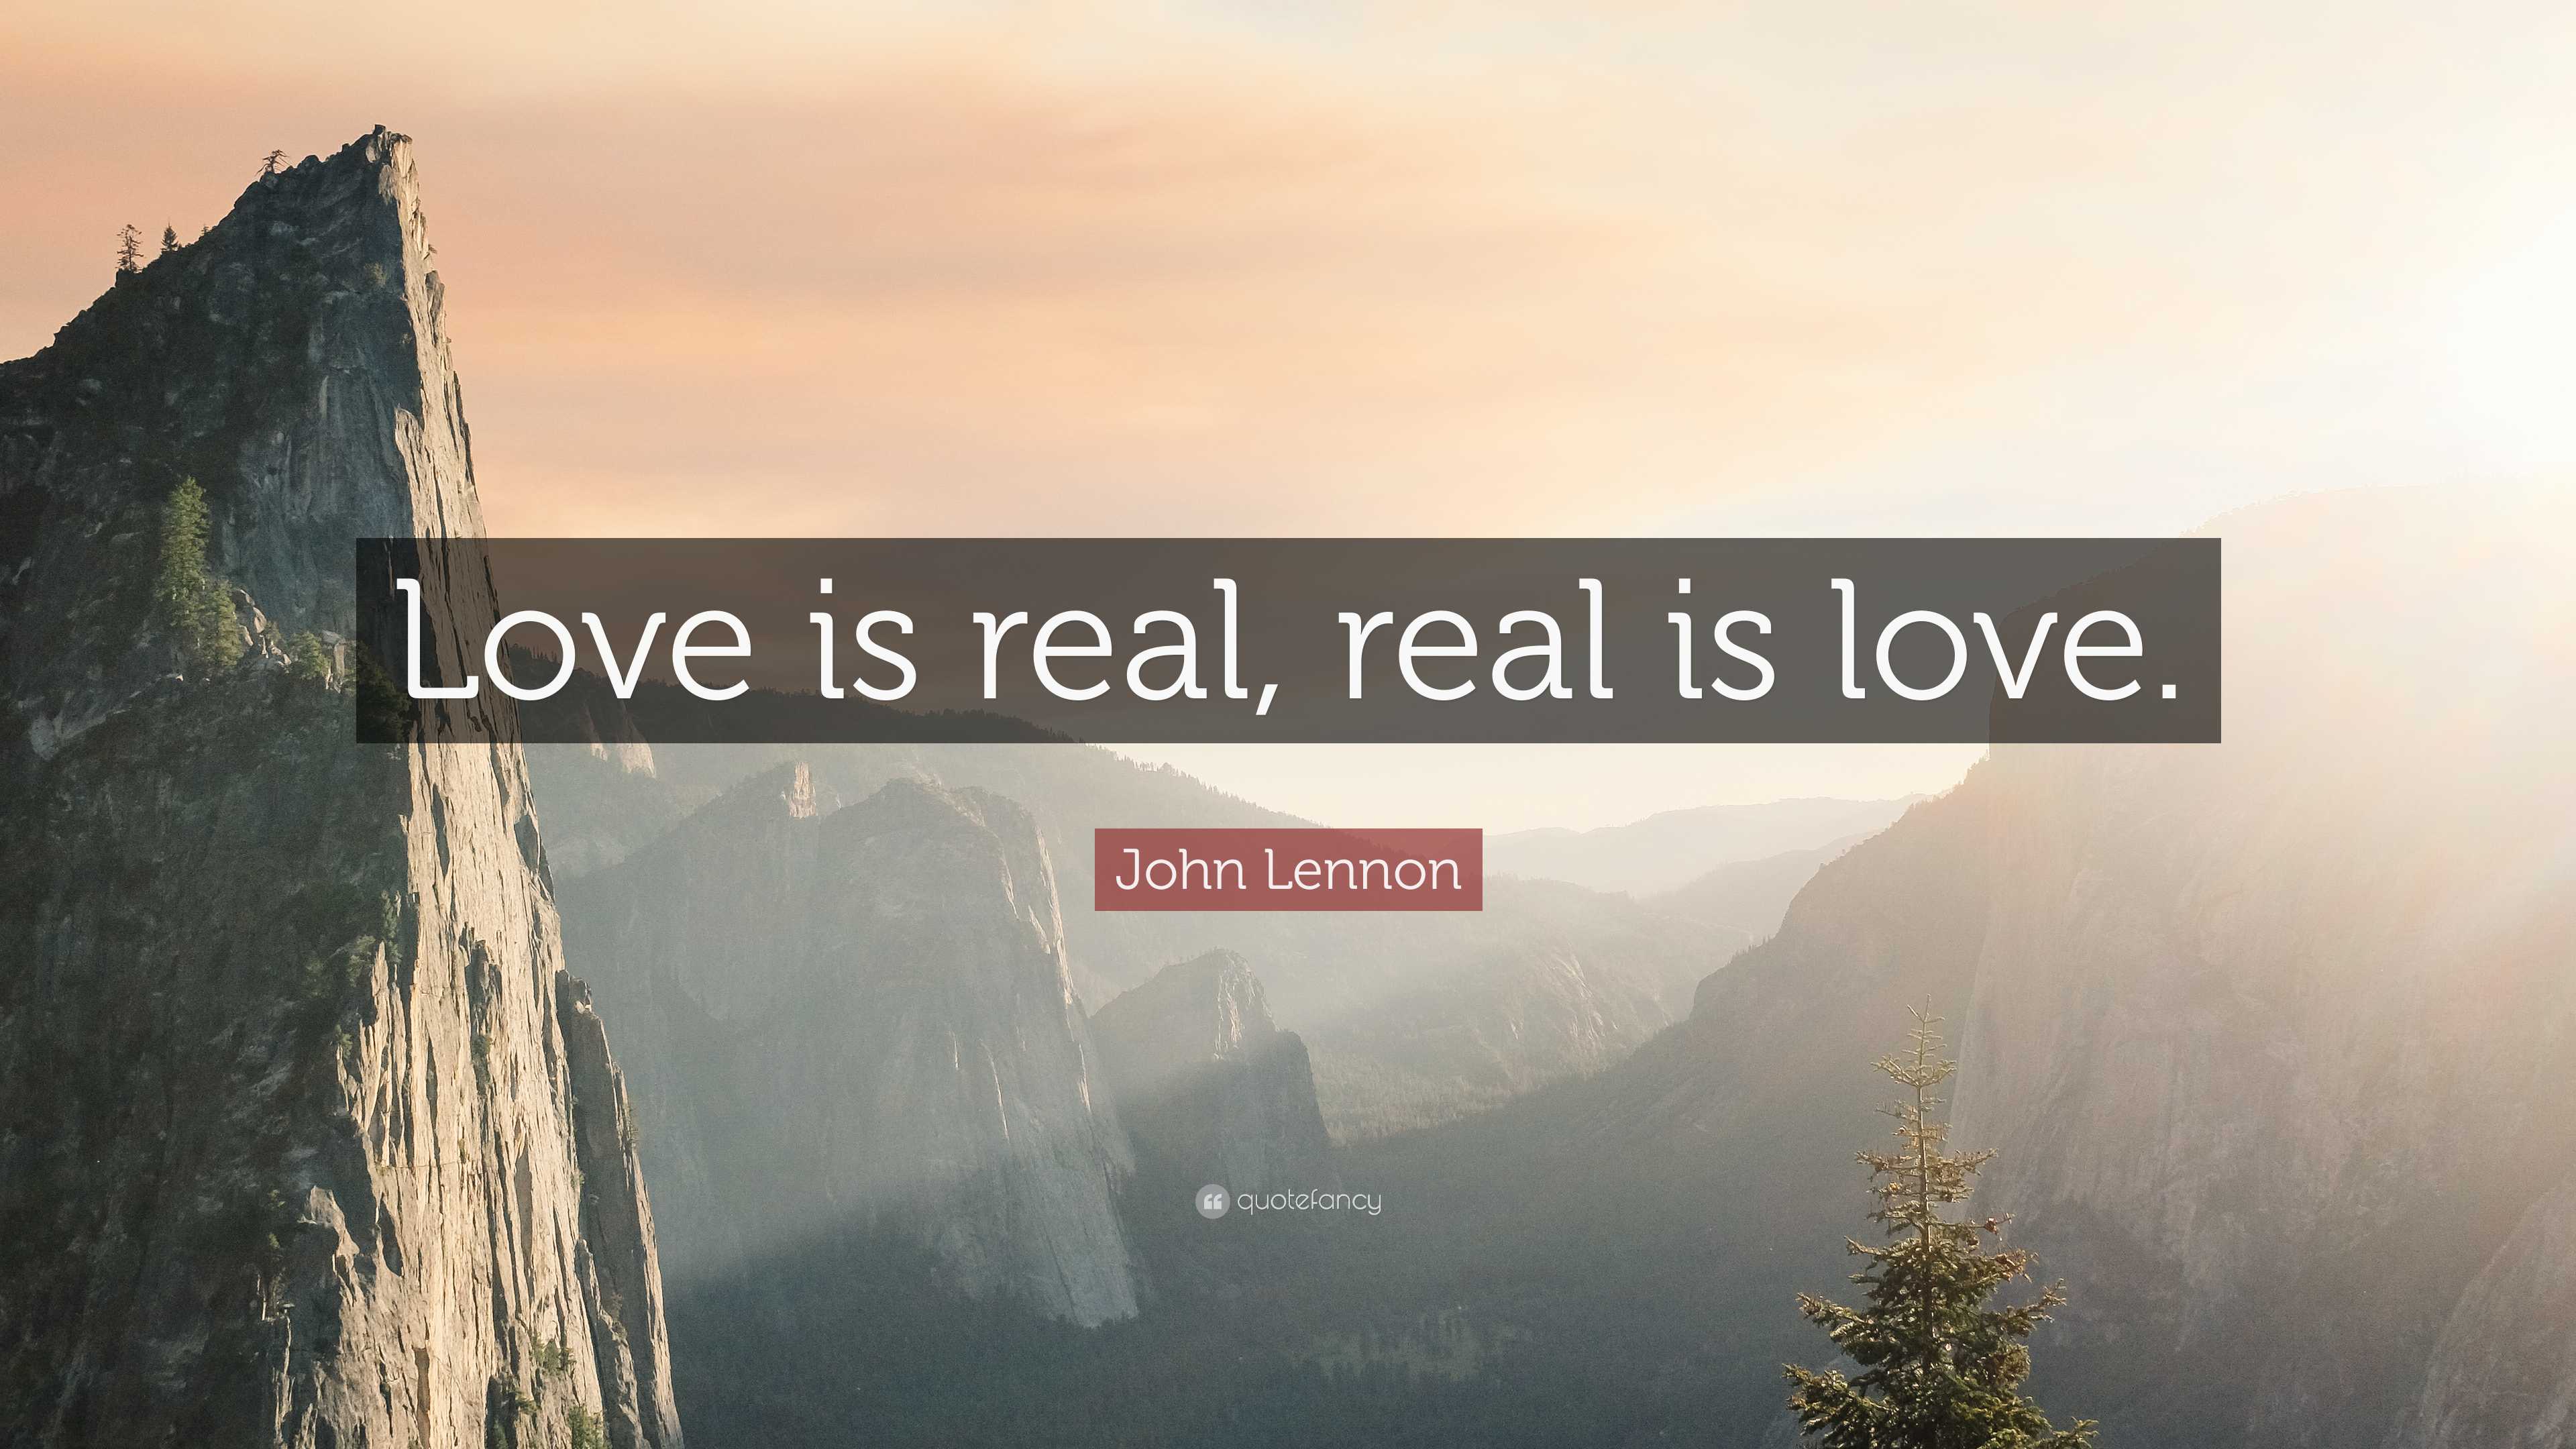 https://quotefancy.com/media/wallpaper/3840x2160/7703740-John-Lennon-Quote-Love-is-real-real-is-love.jpg